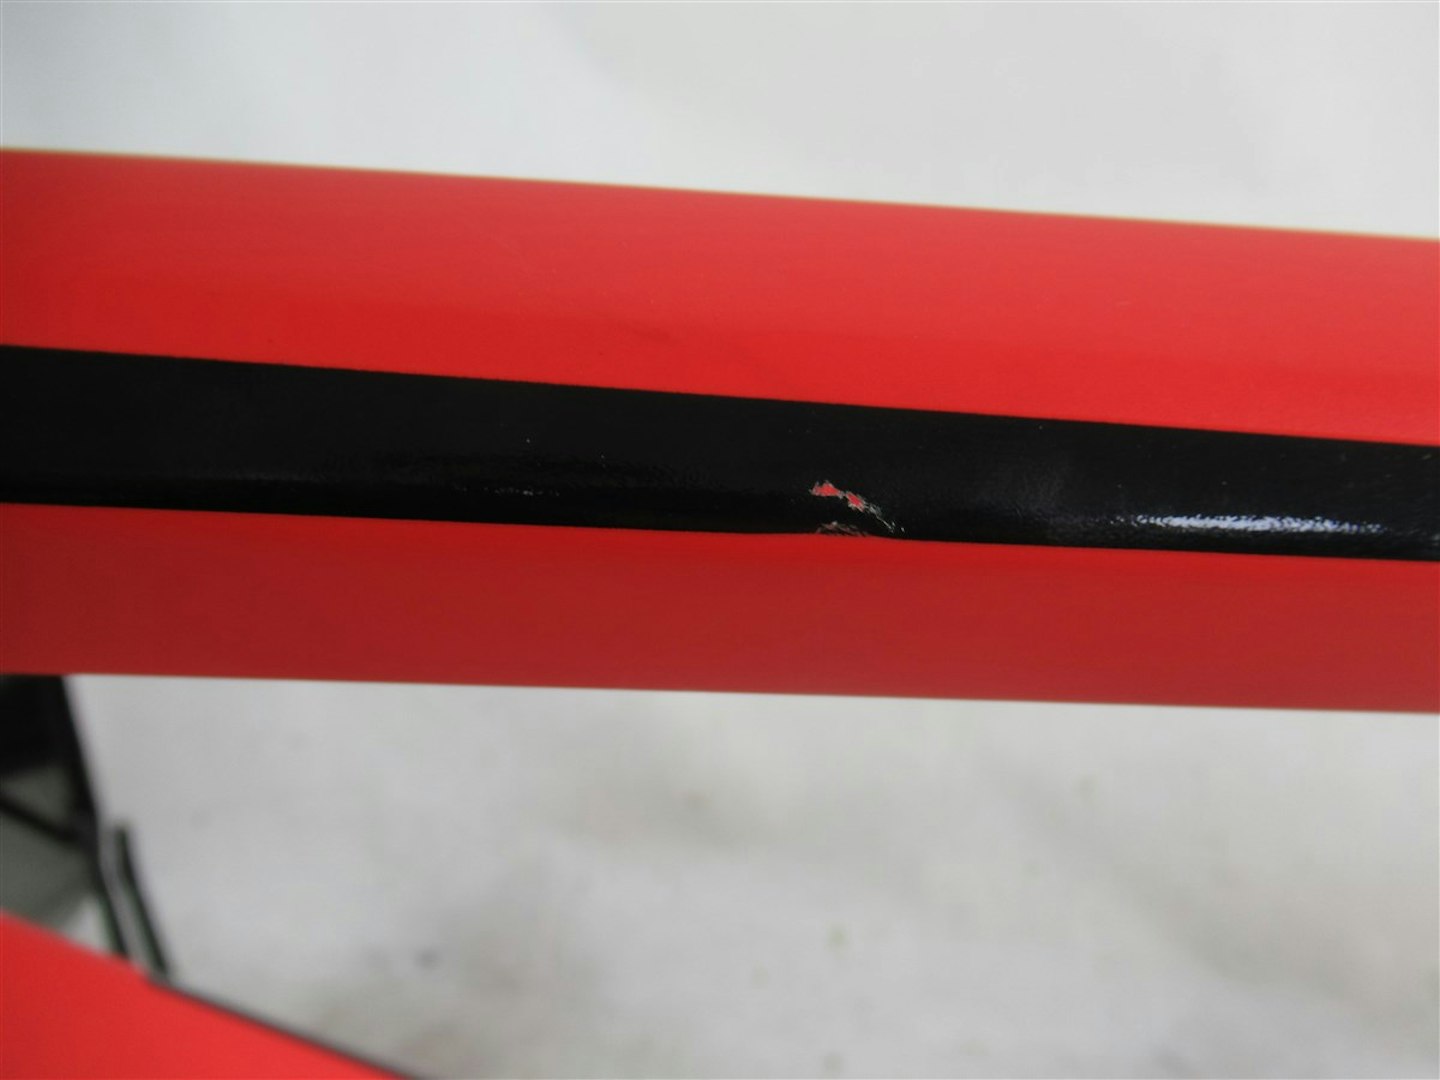 BMC Teammachine SLR FIVE top tube damage